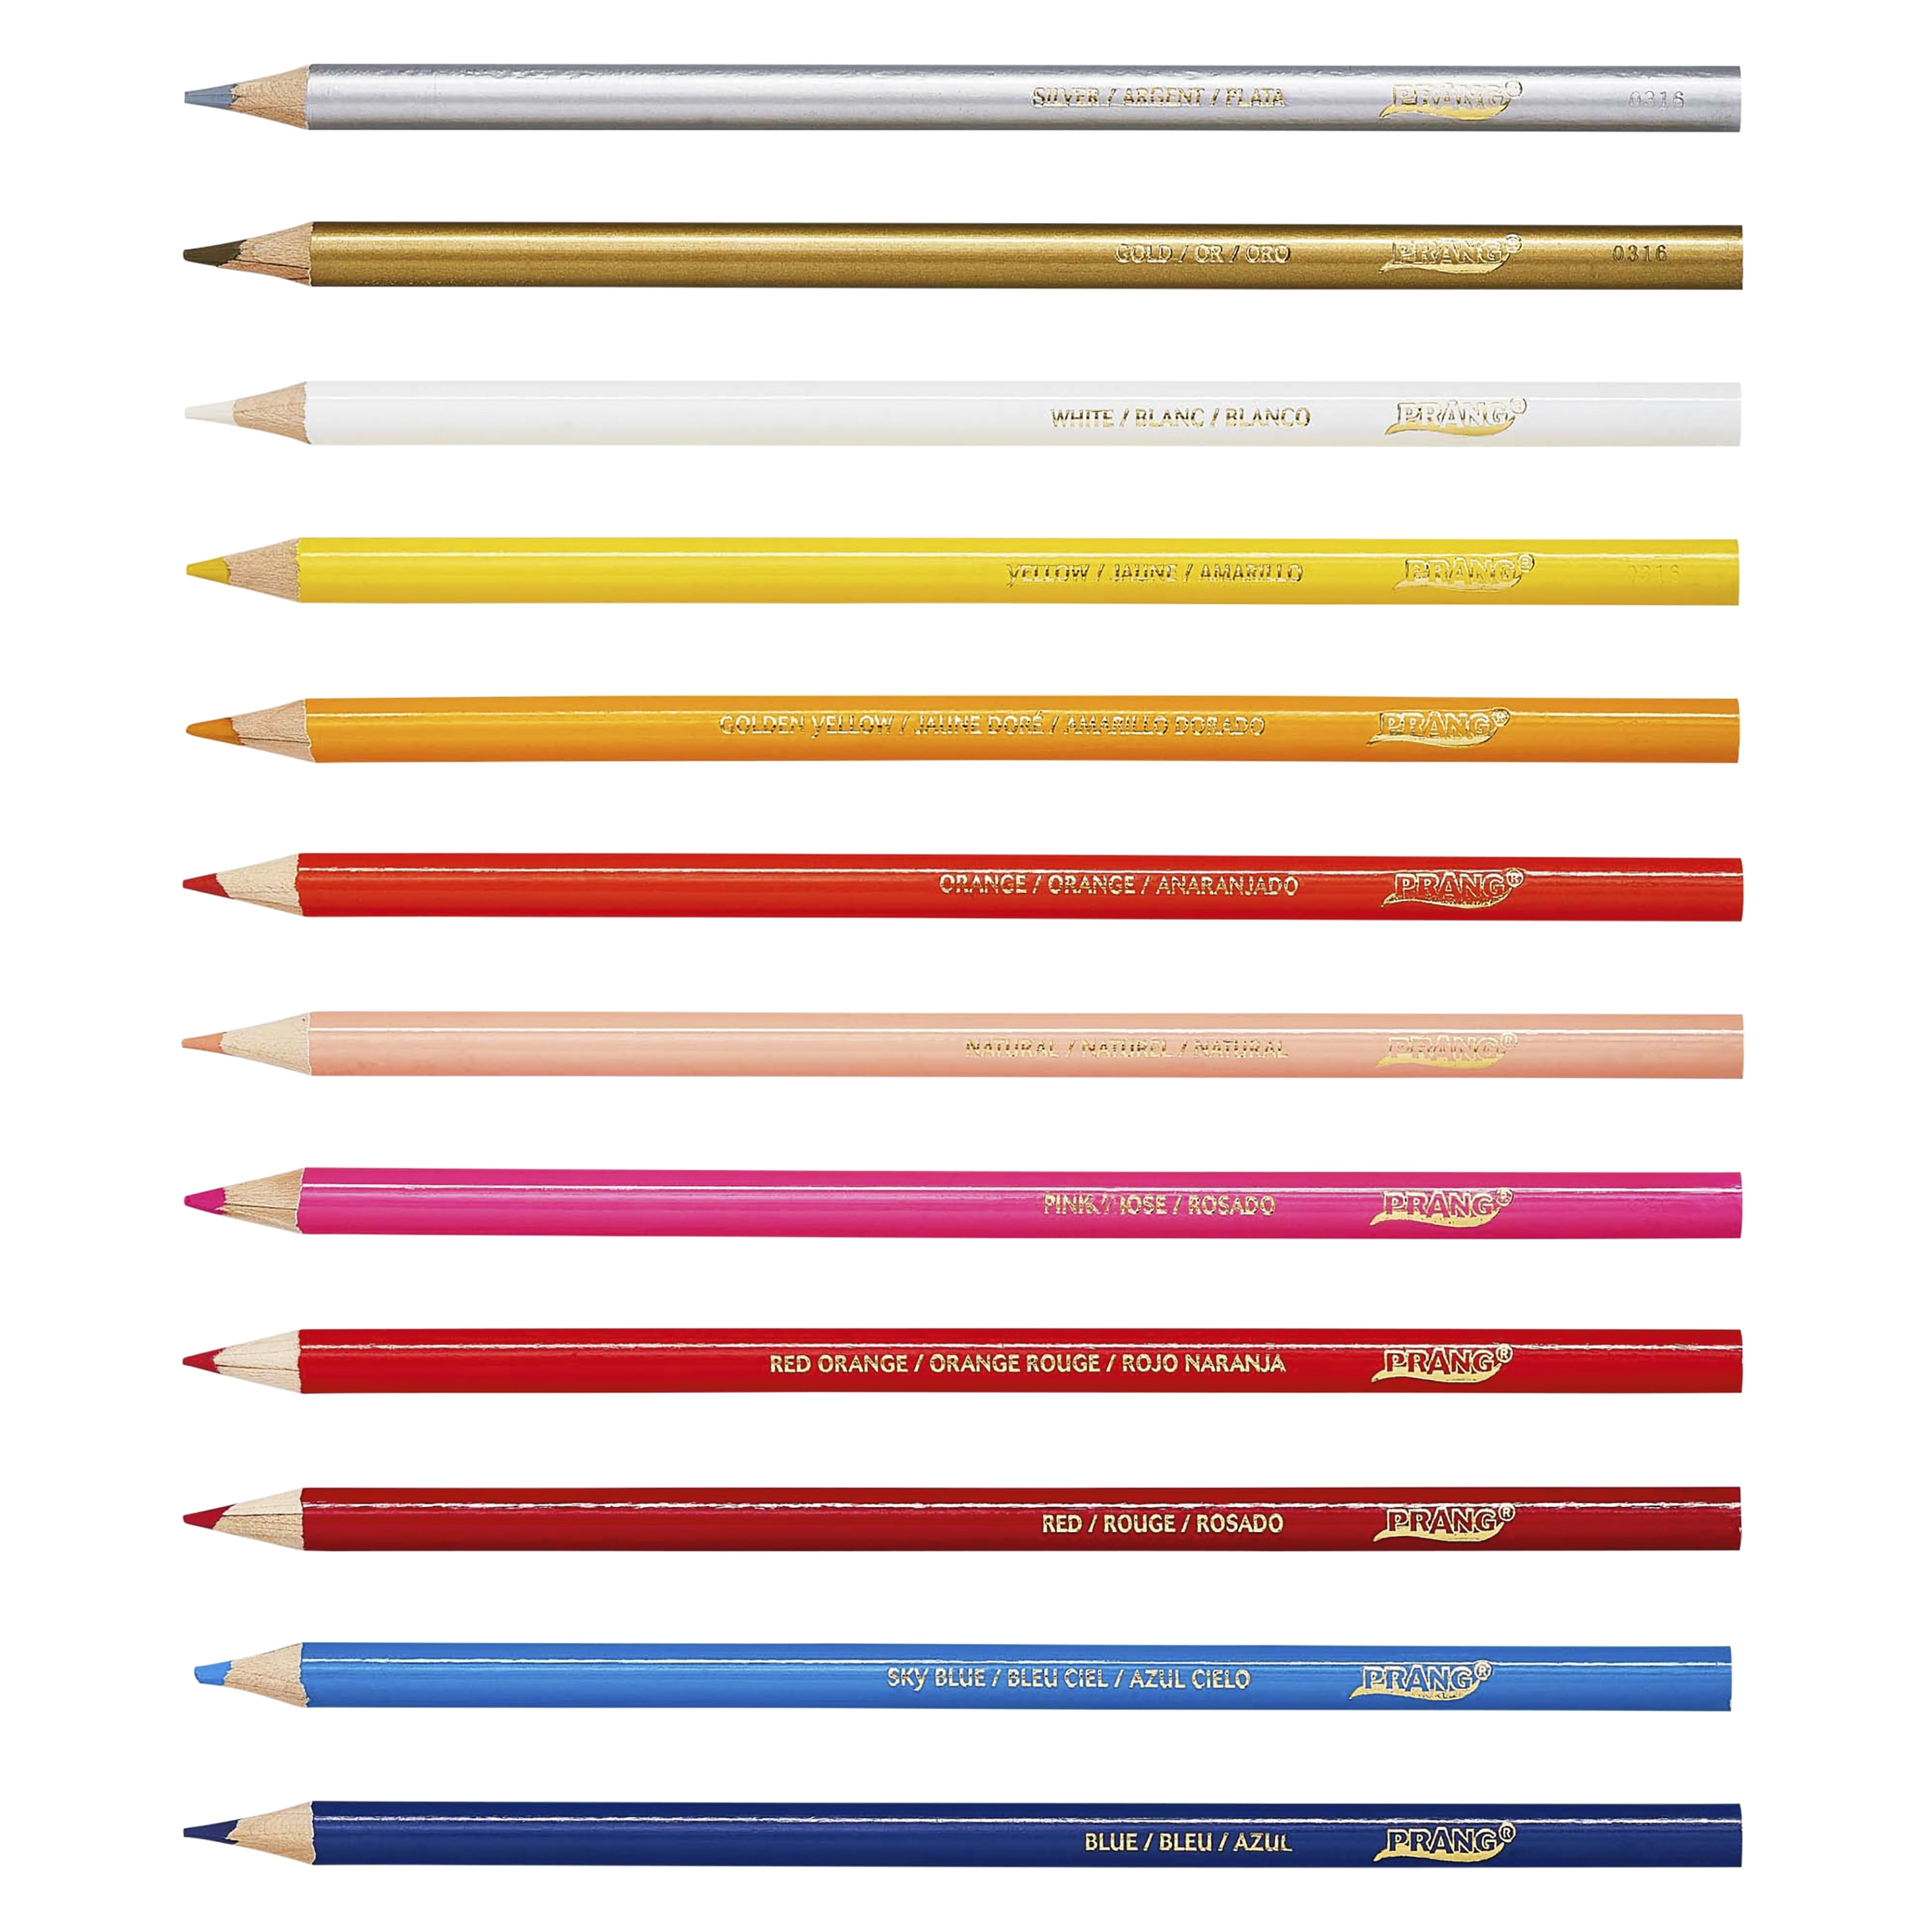 Prang Colored Pencils 24 Set